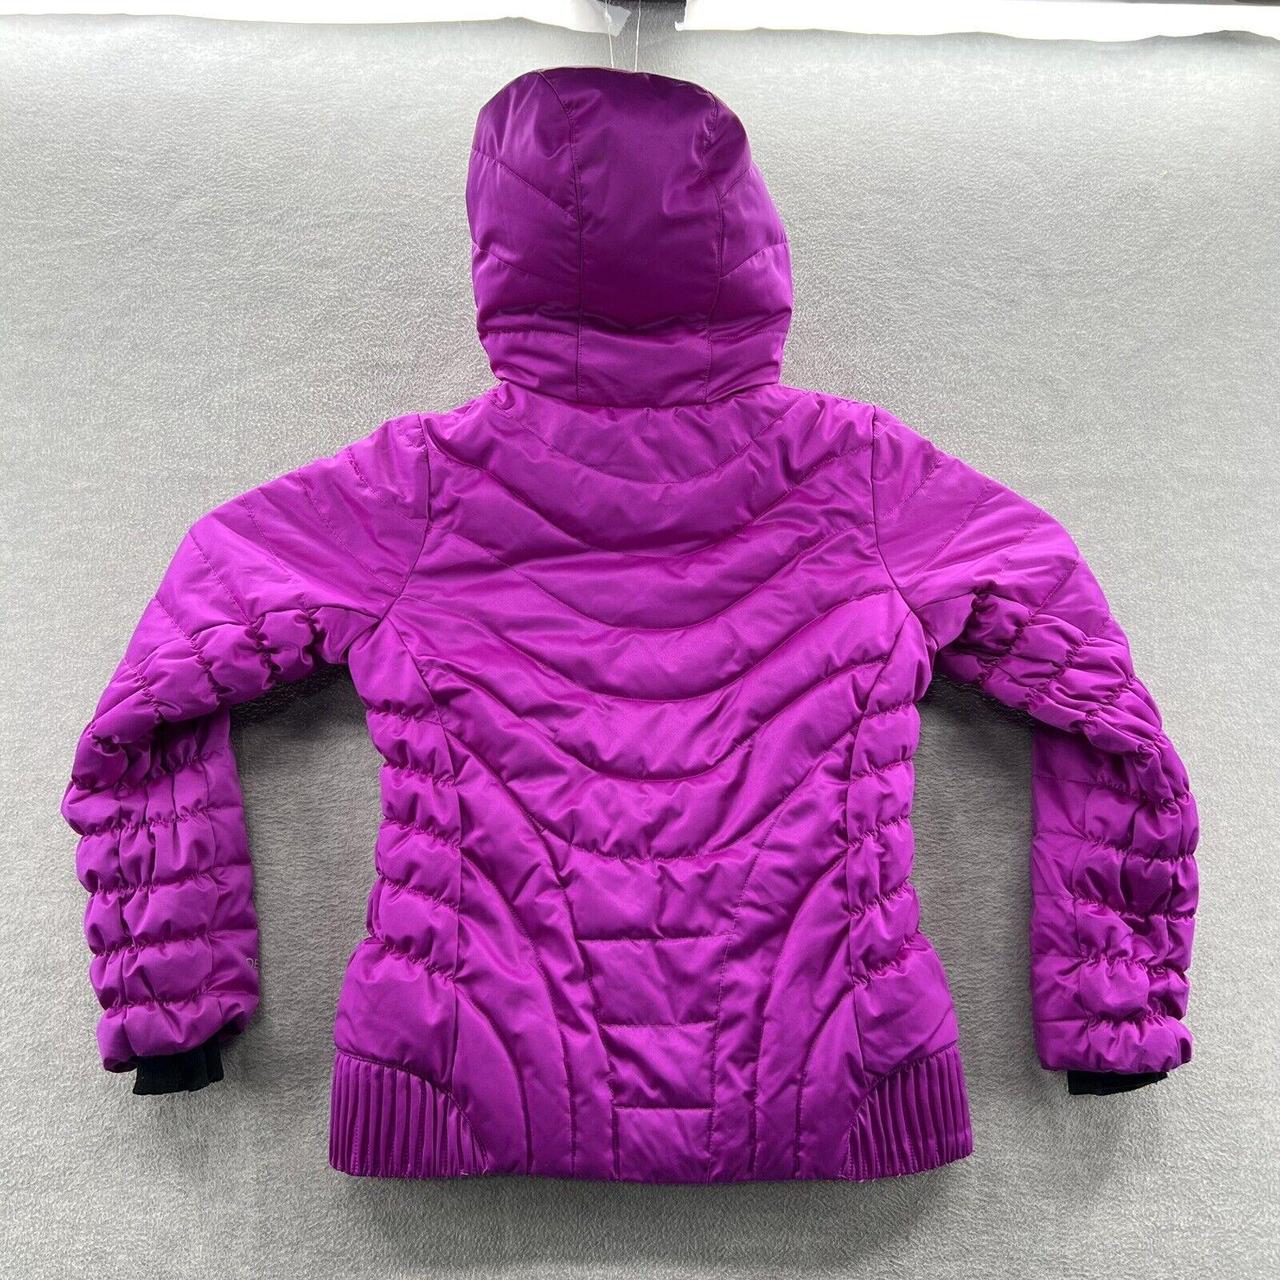 obermeyer Purple Puffer ski jacket size m (10-12)... - Depop